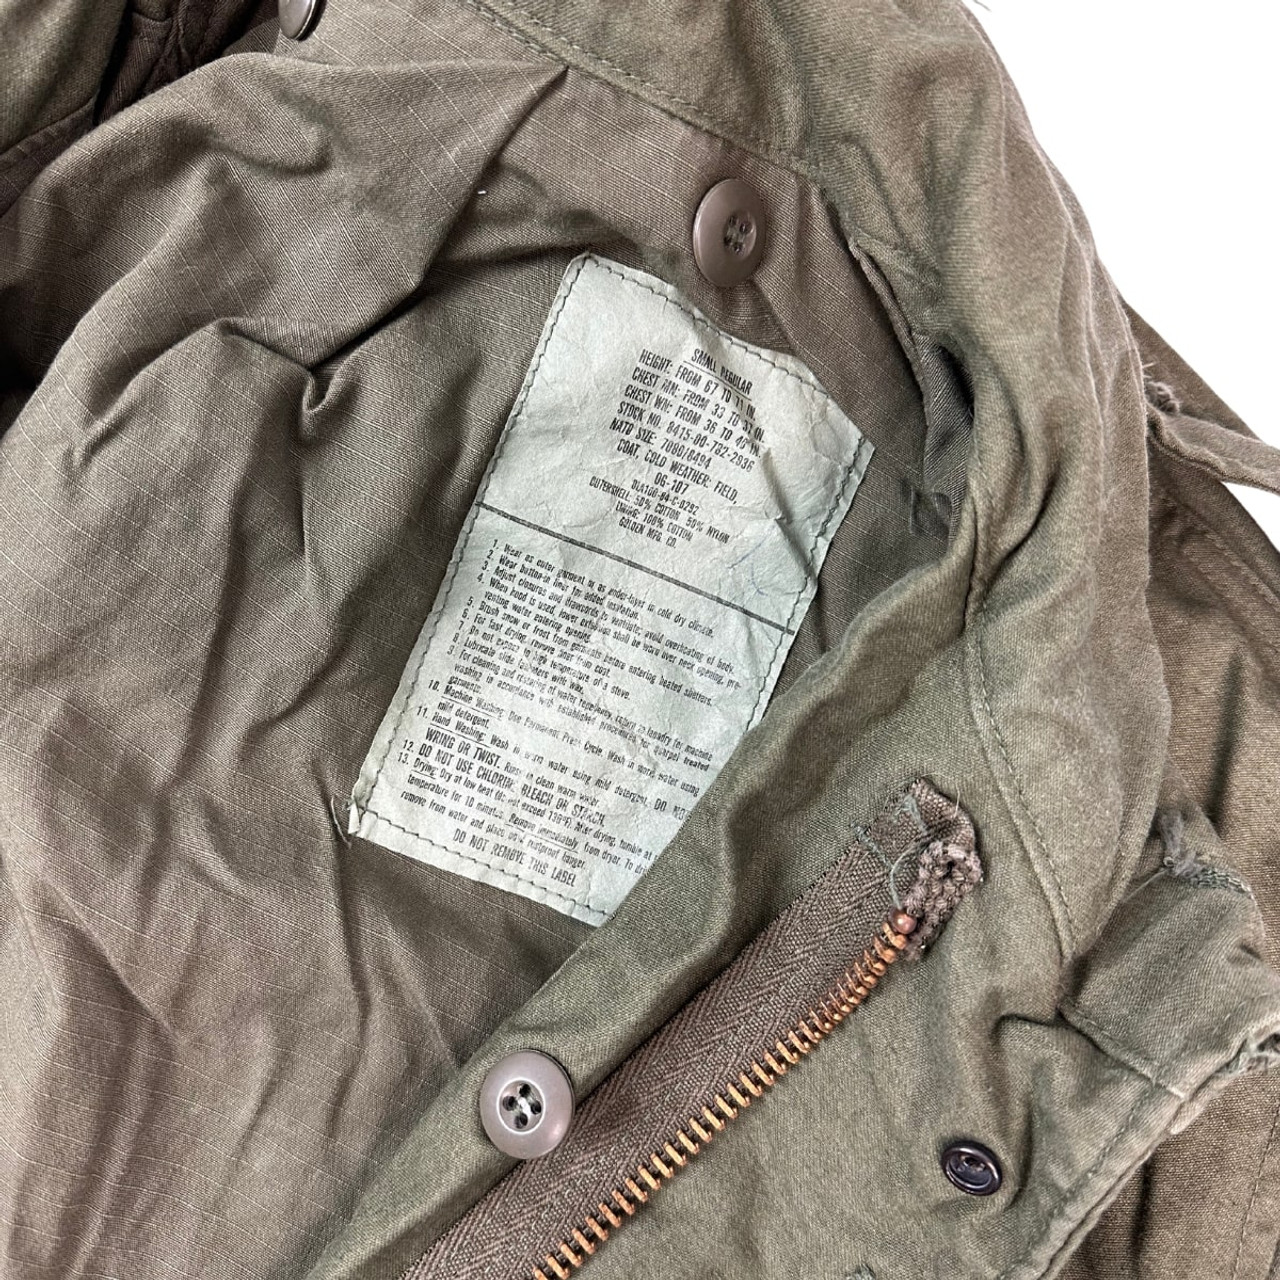 Vintage Issue 1970-80's Olive M65 Field Jacket | Military Surplus